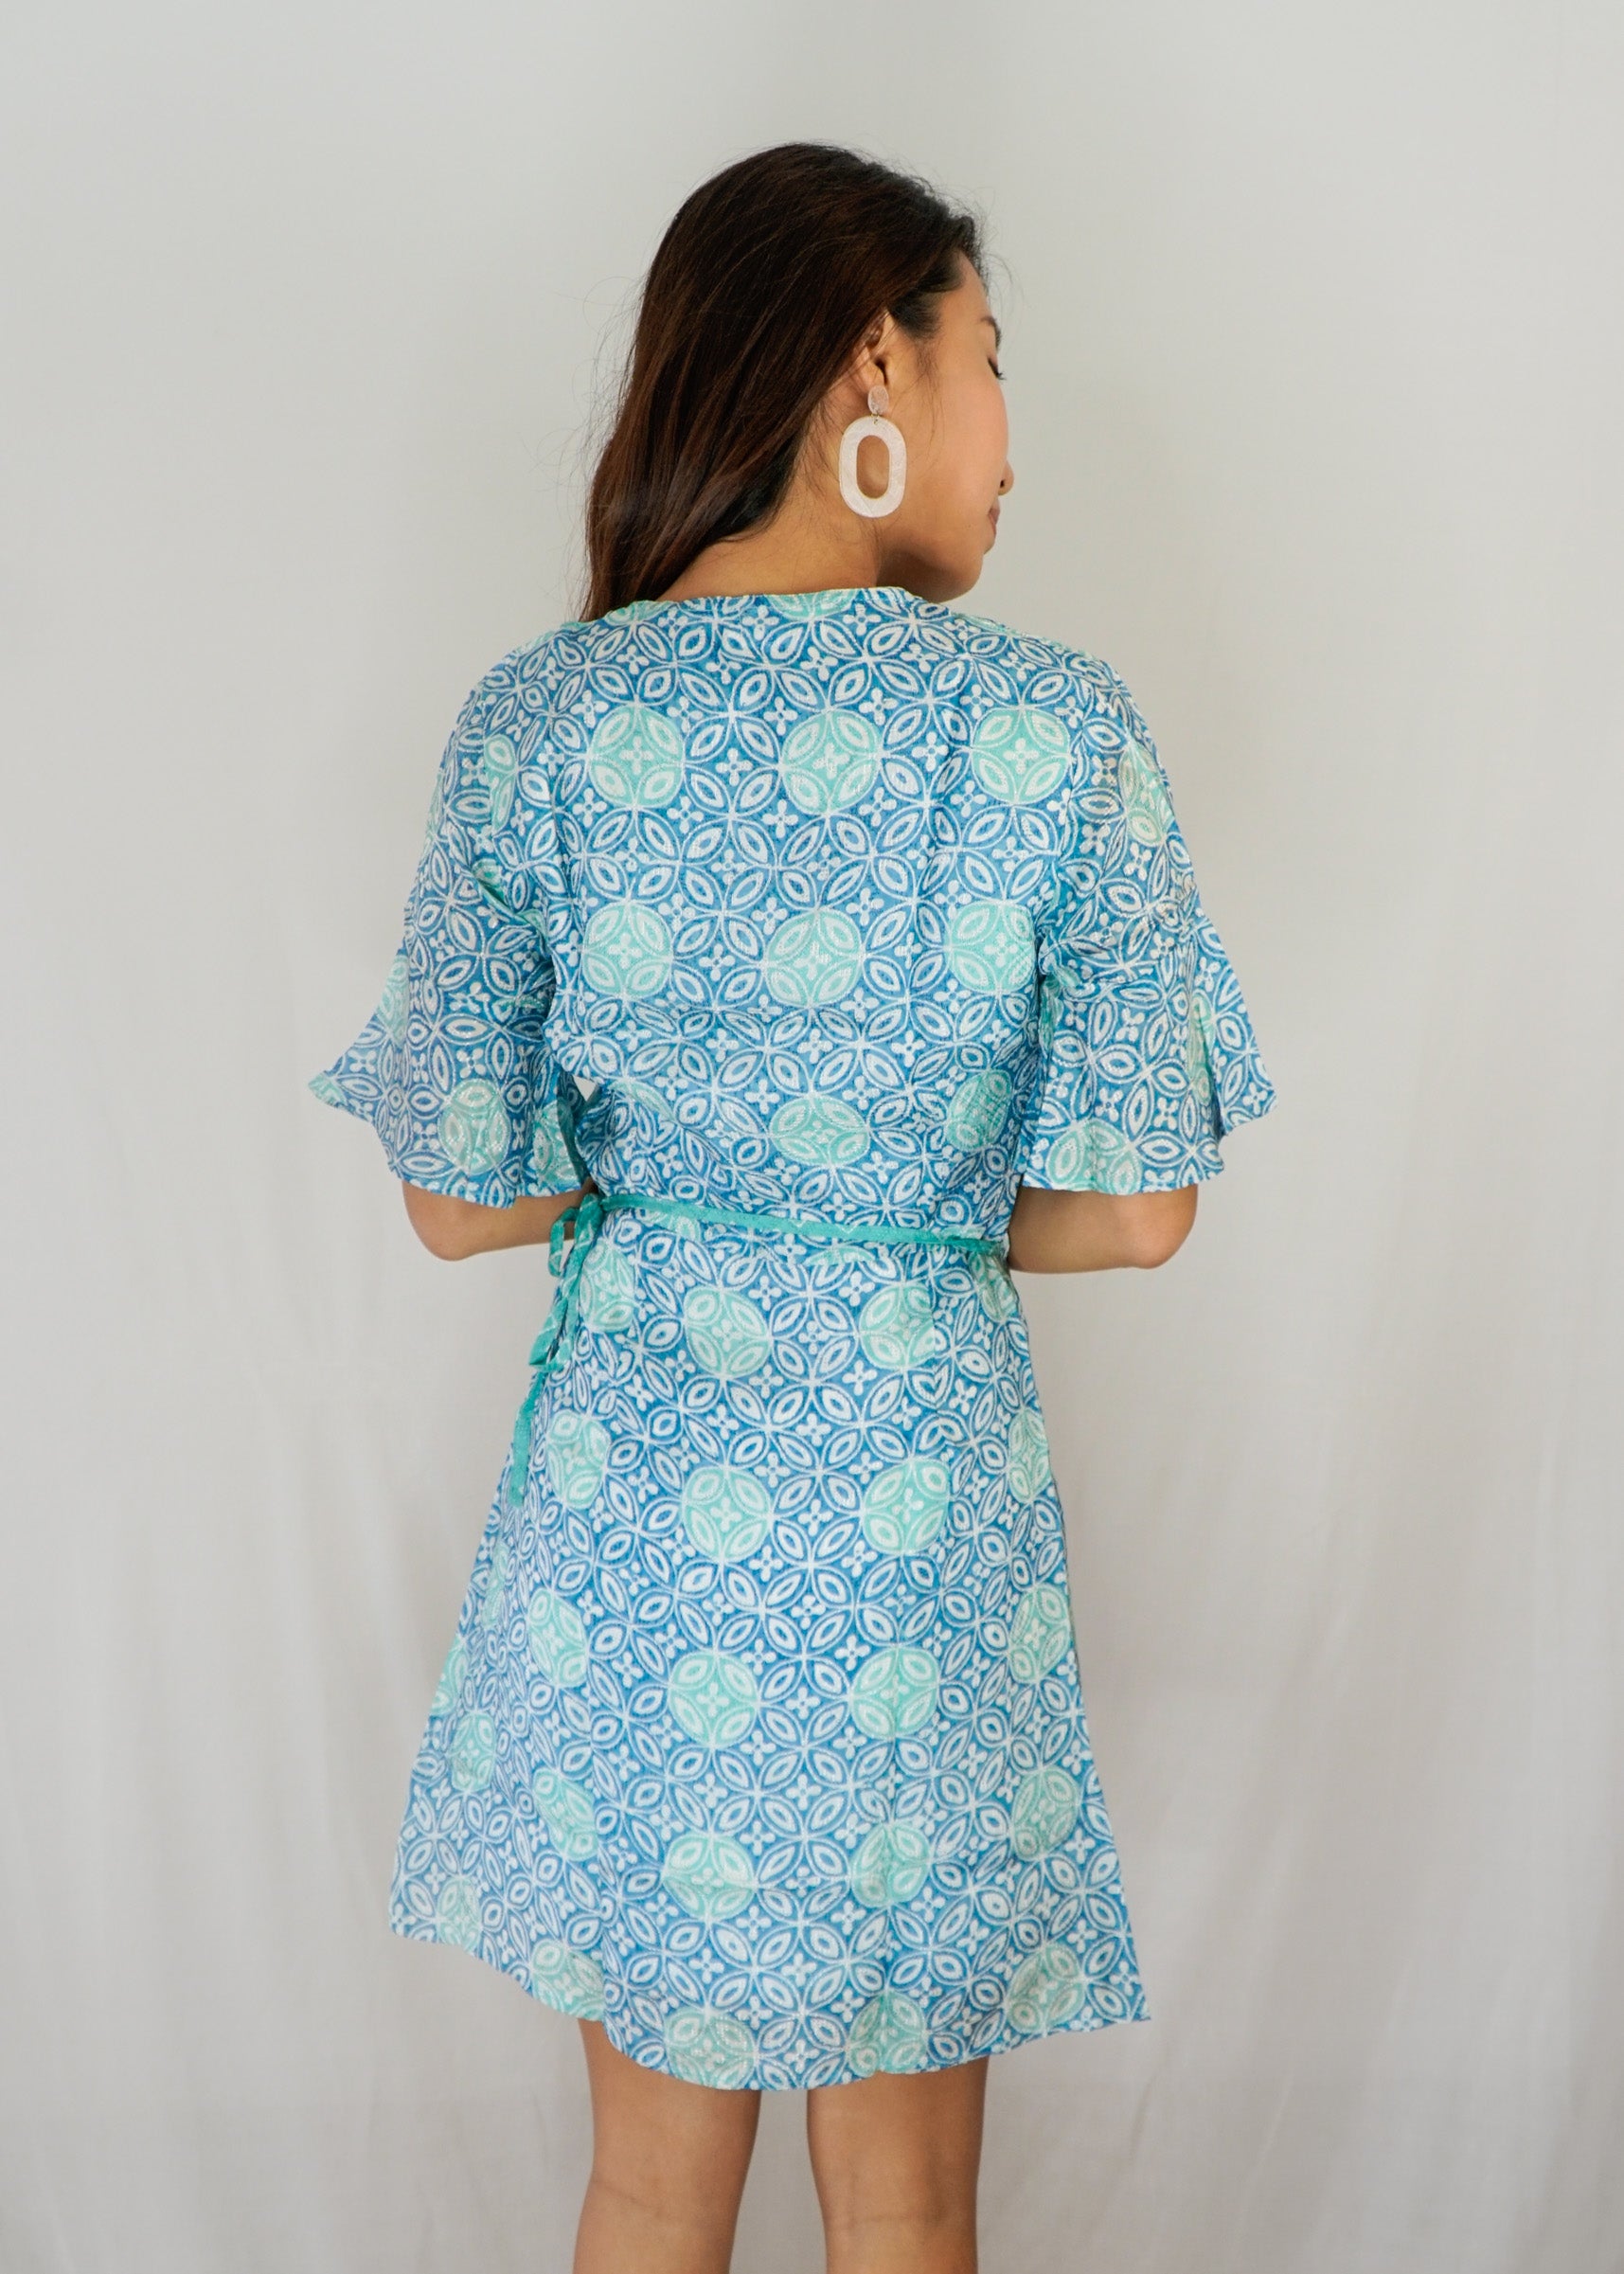 Magnolia Batik Wrap Dress in Turquoise Kawung